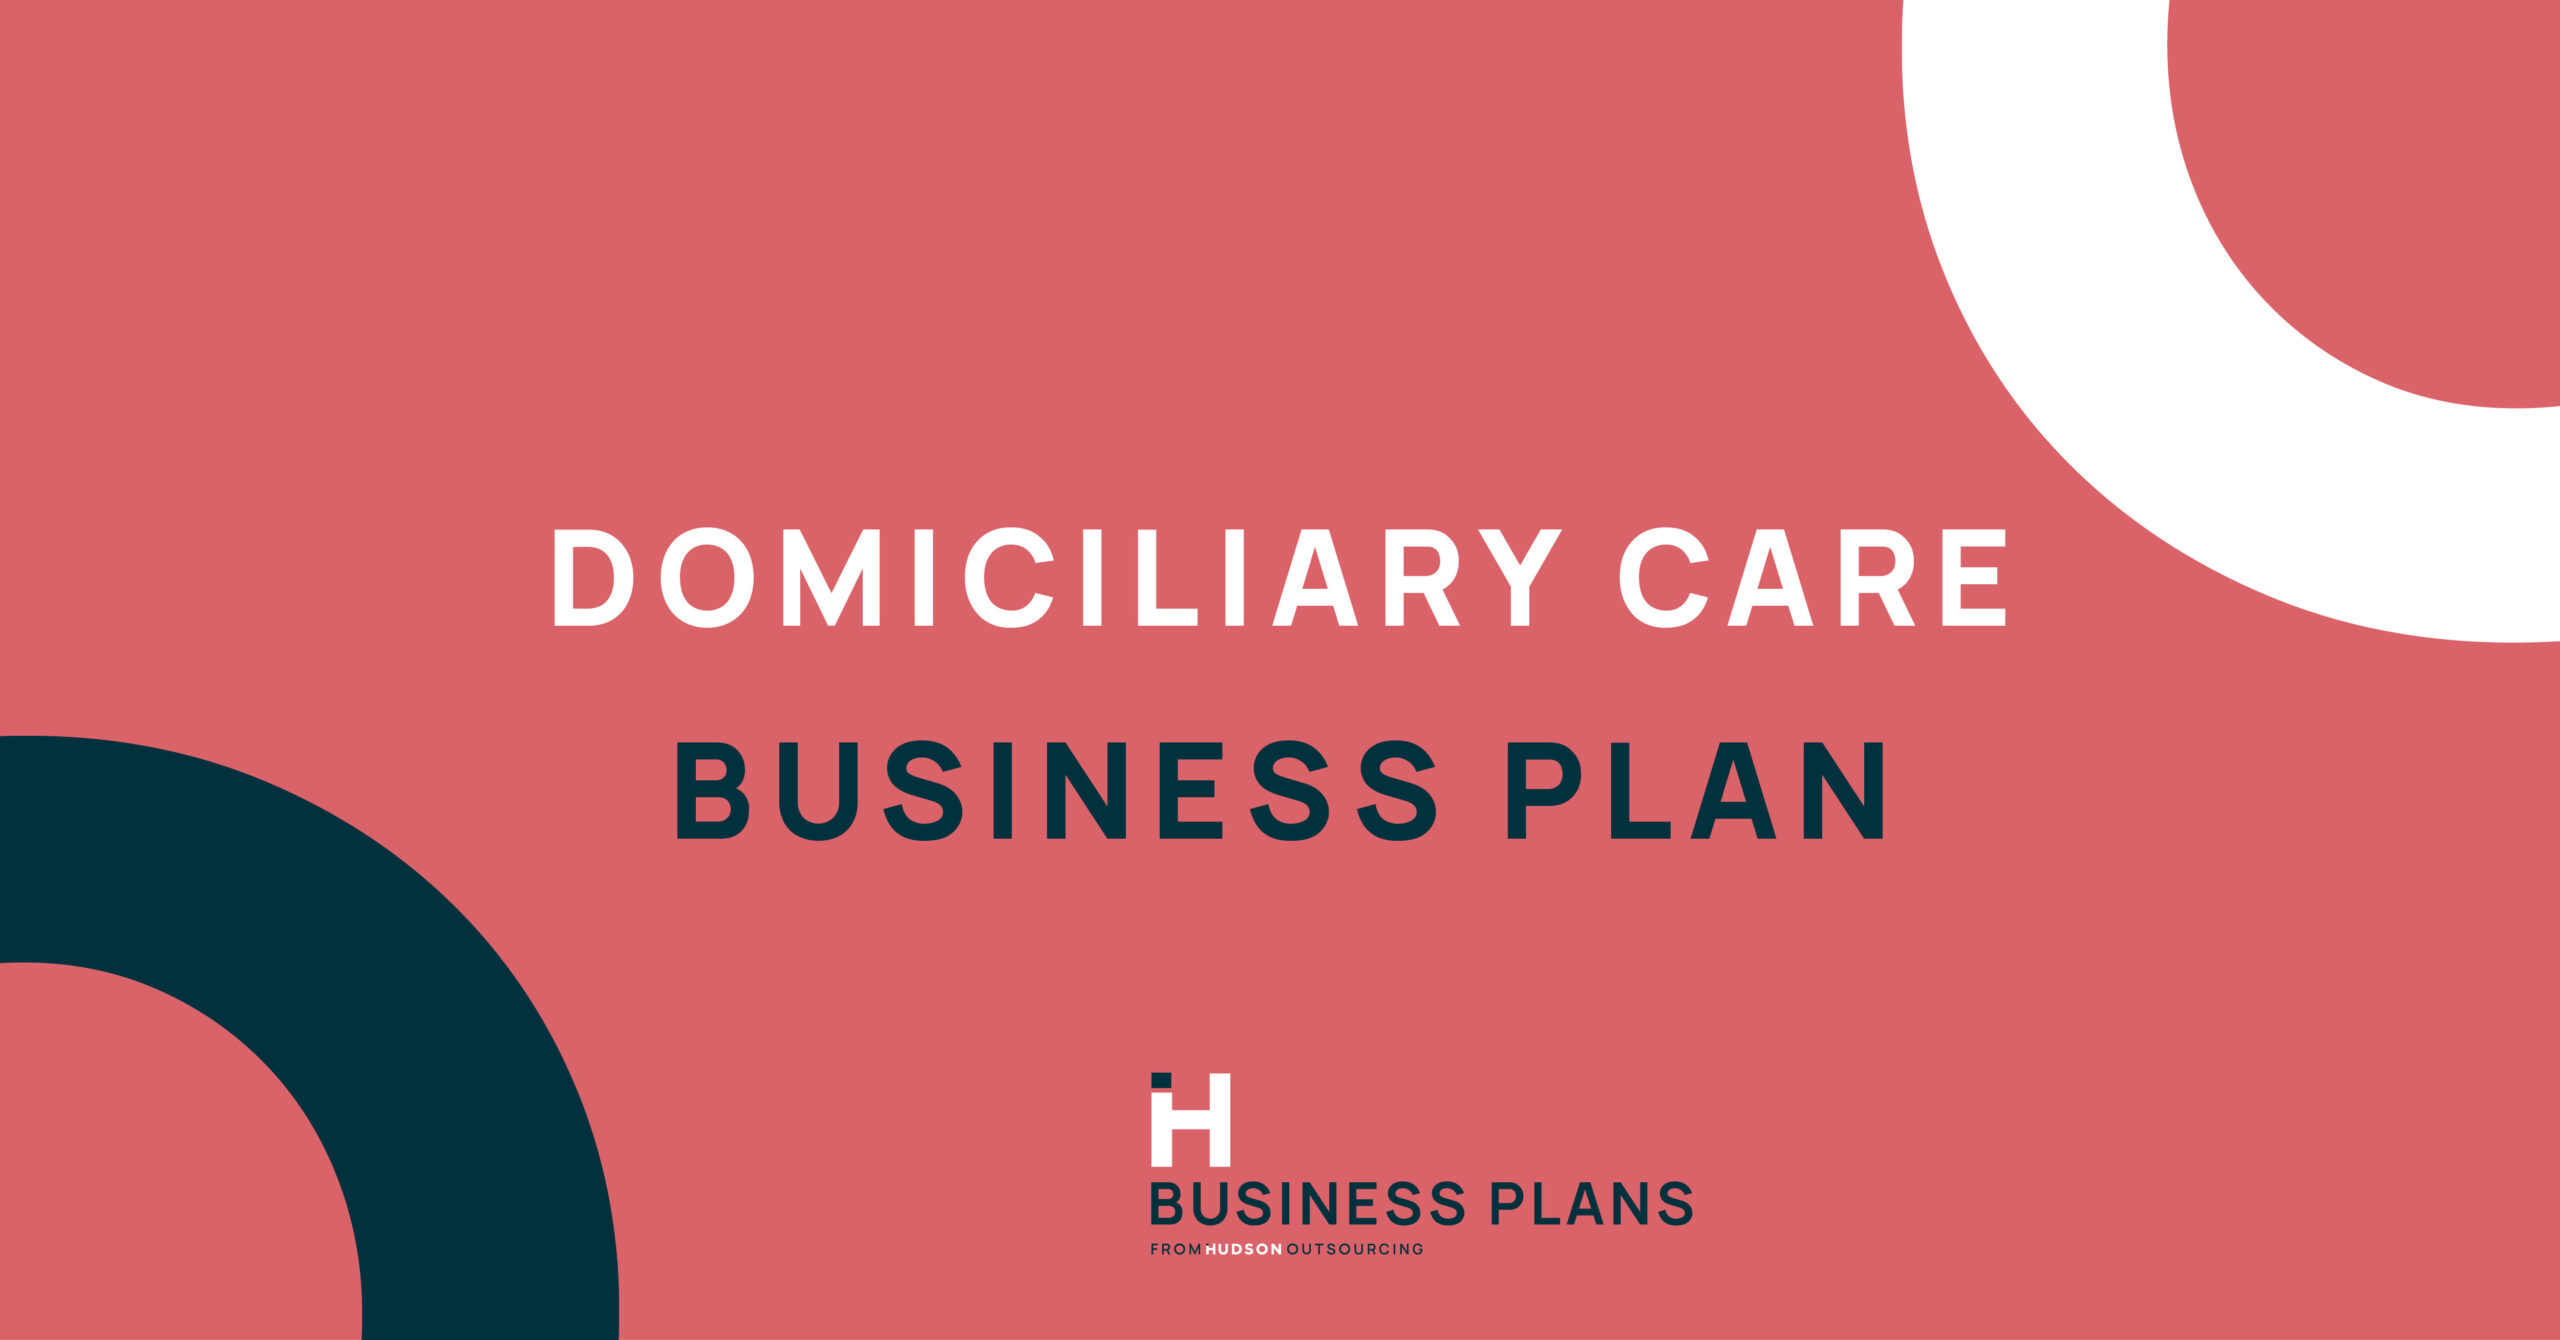 domiciliary care business plan pdf